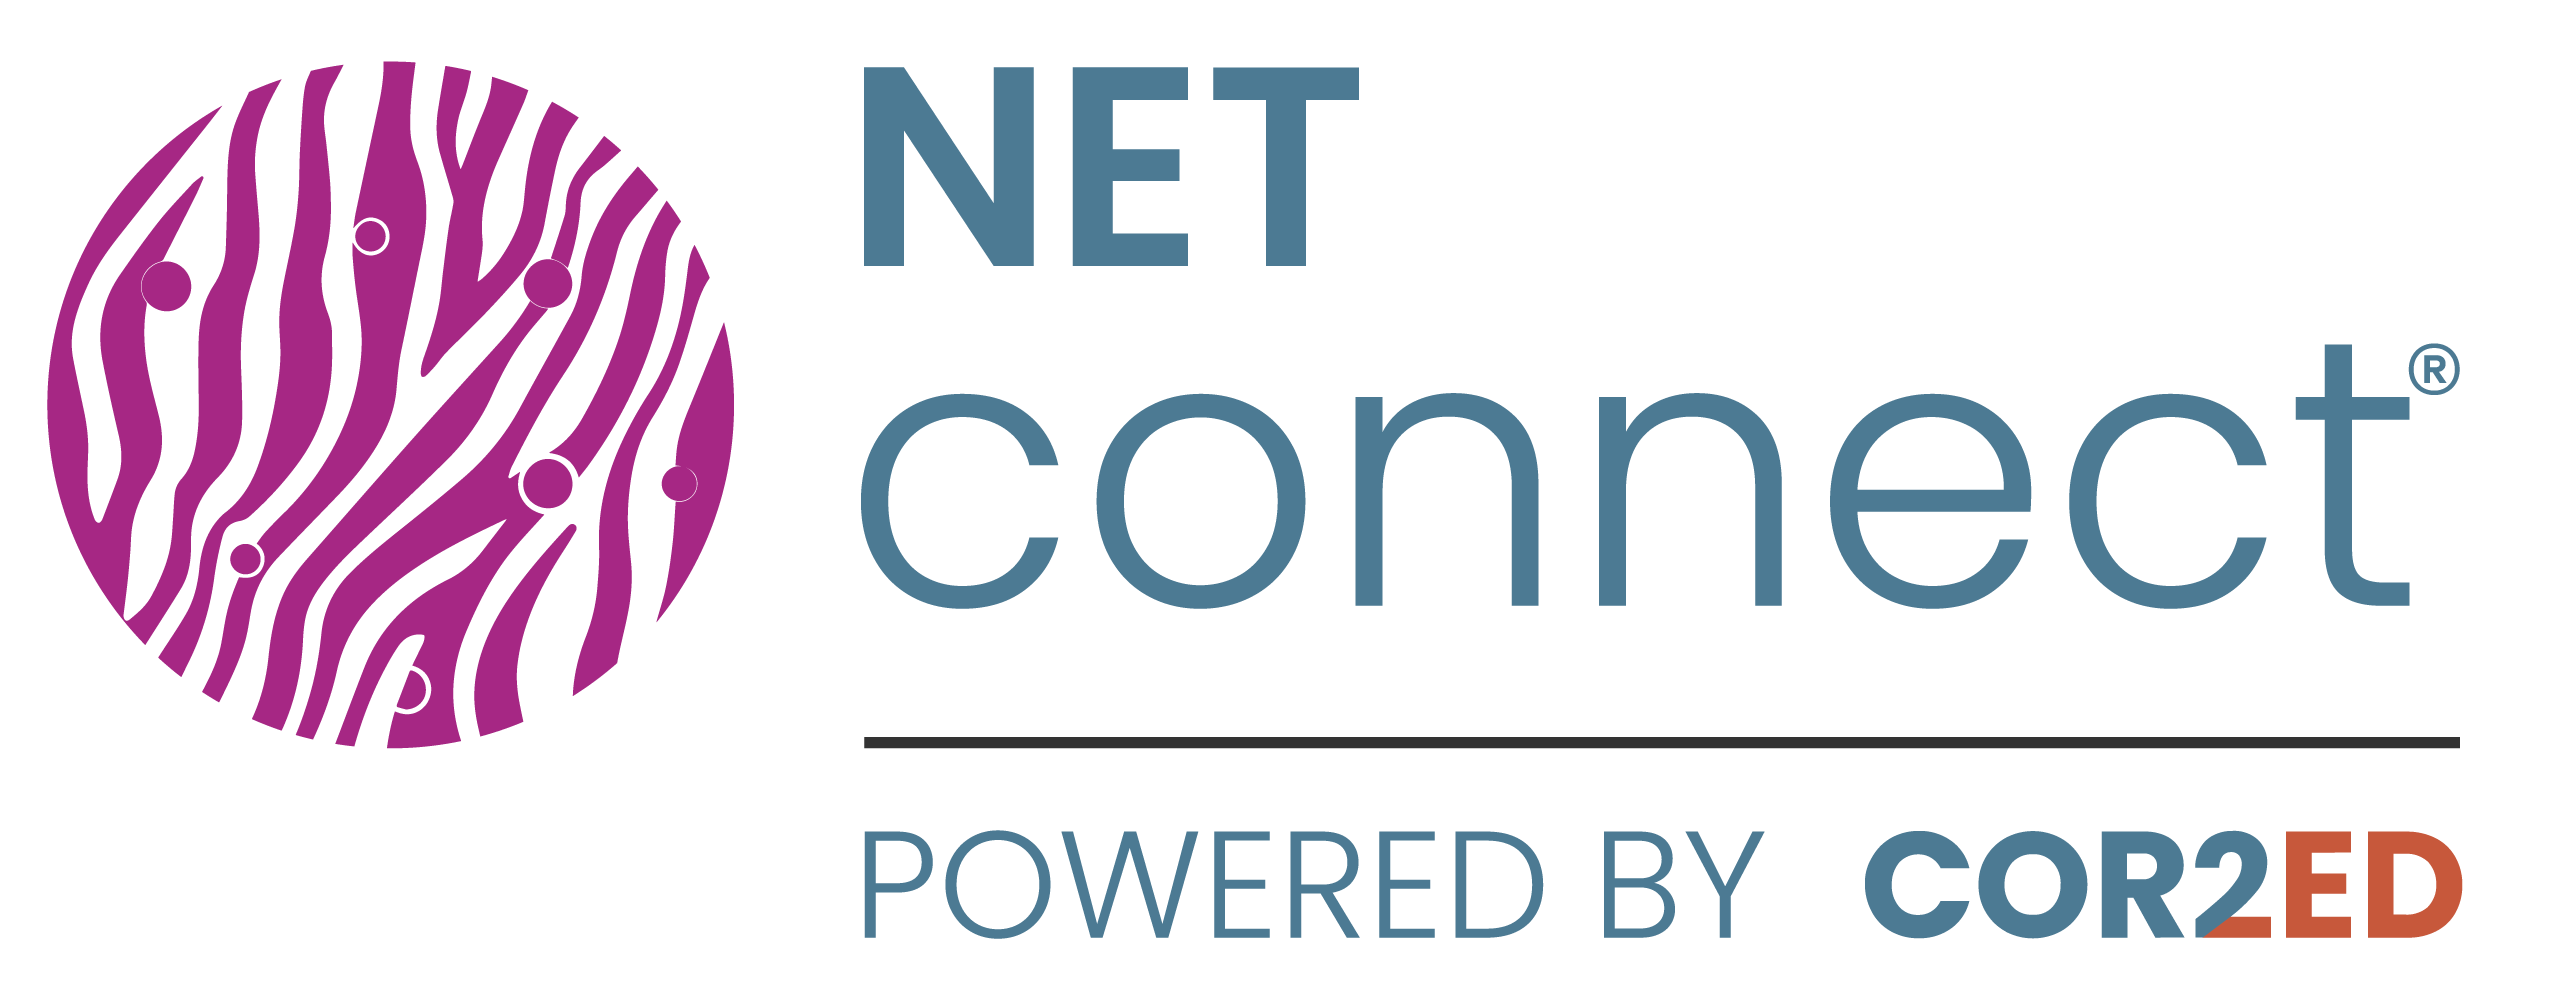 NET CONNECT